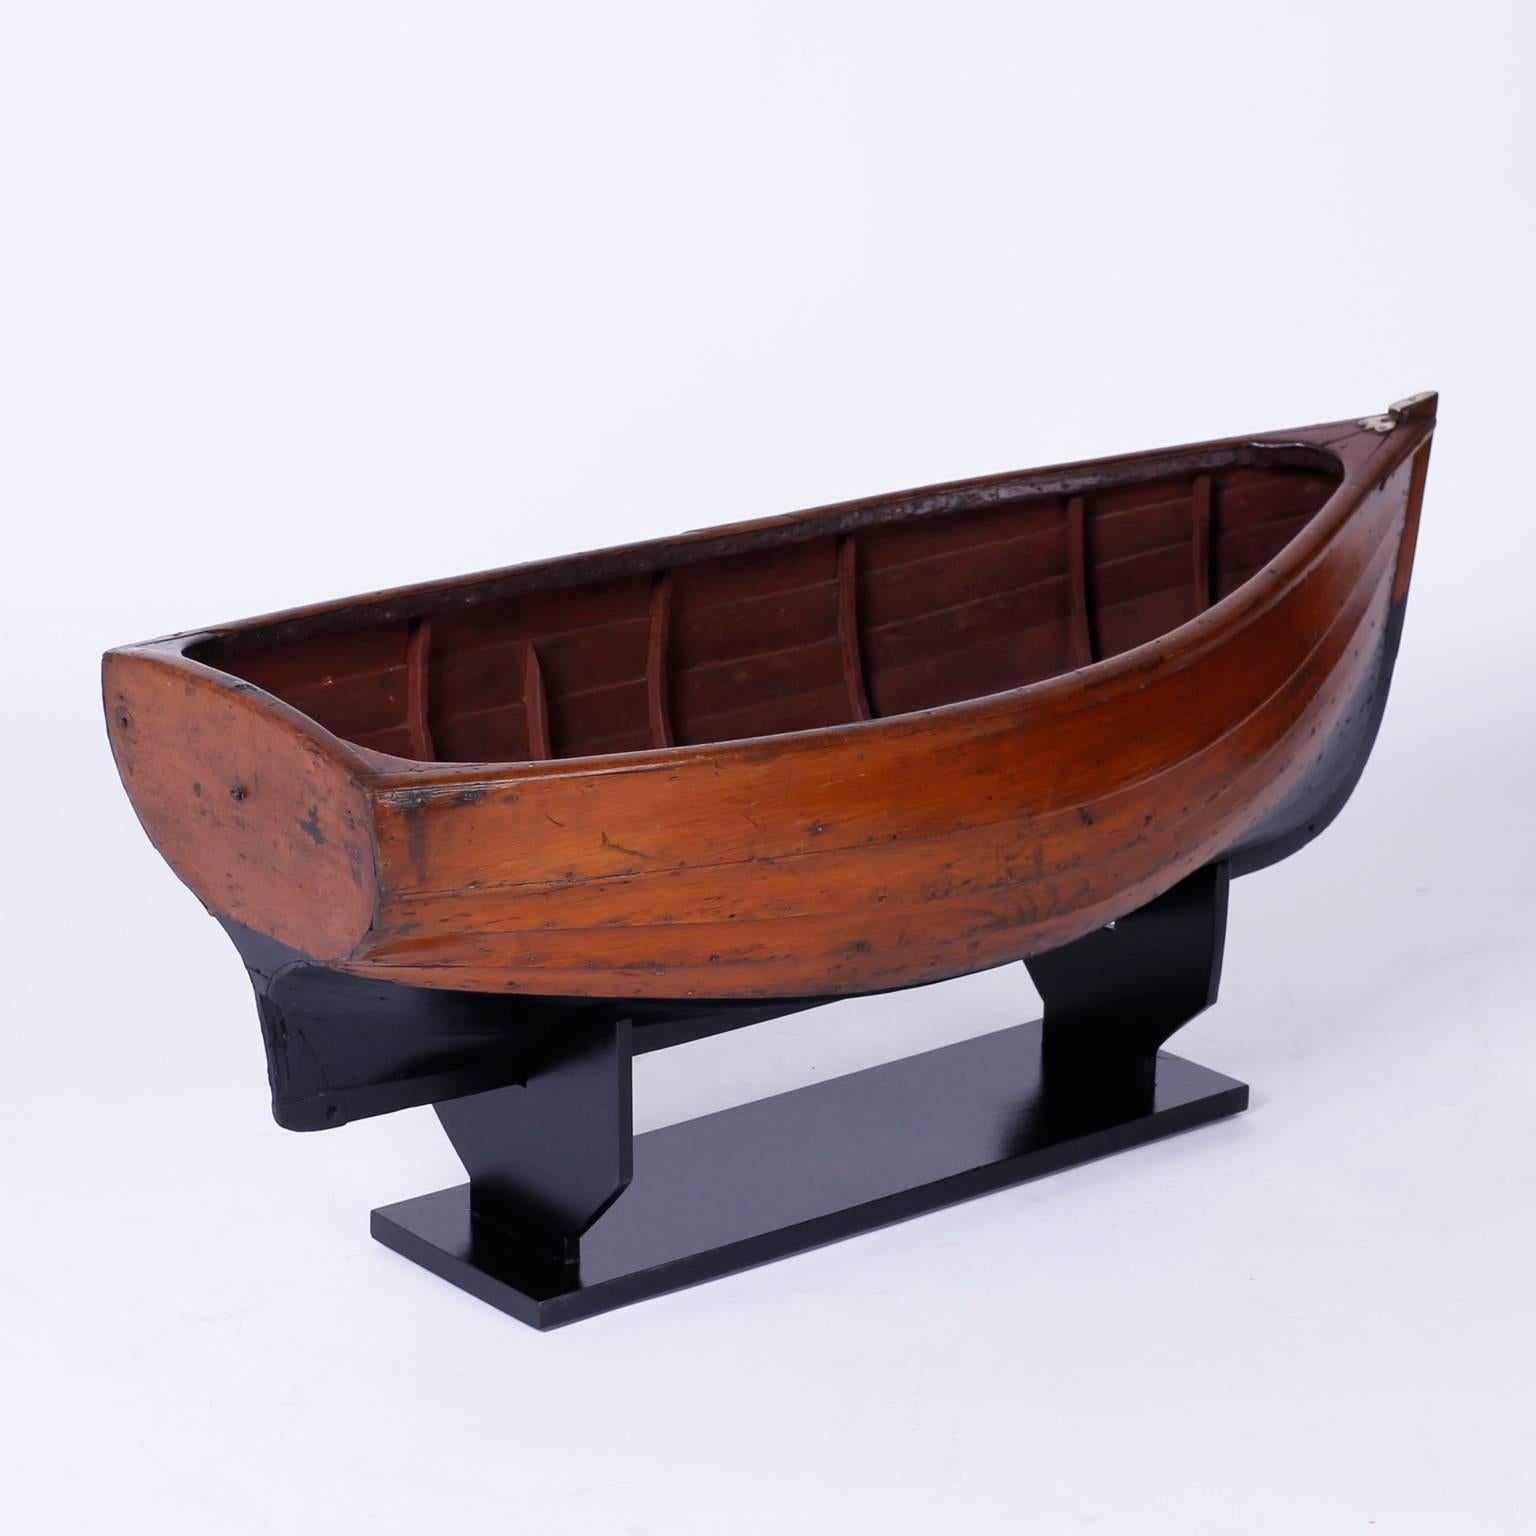 English Large Mahogany Antique Boat Model For Sale